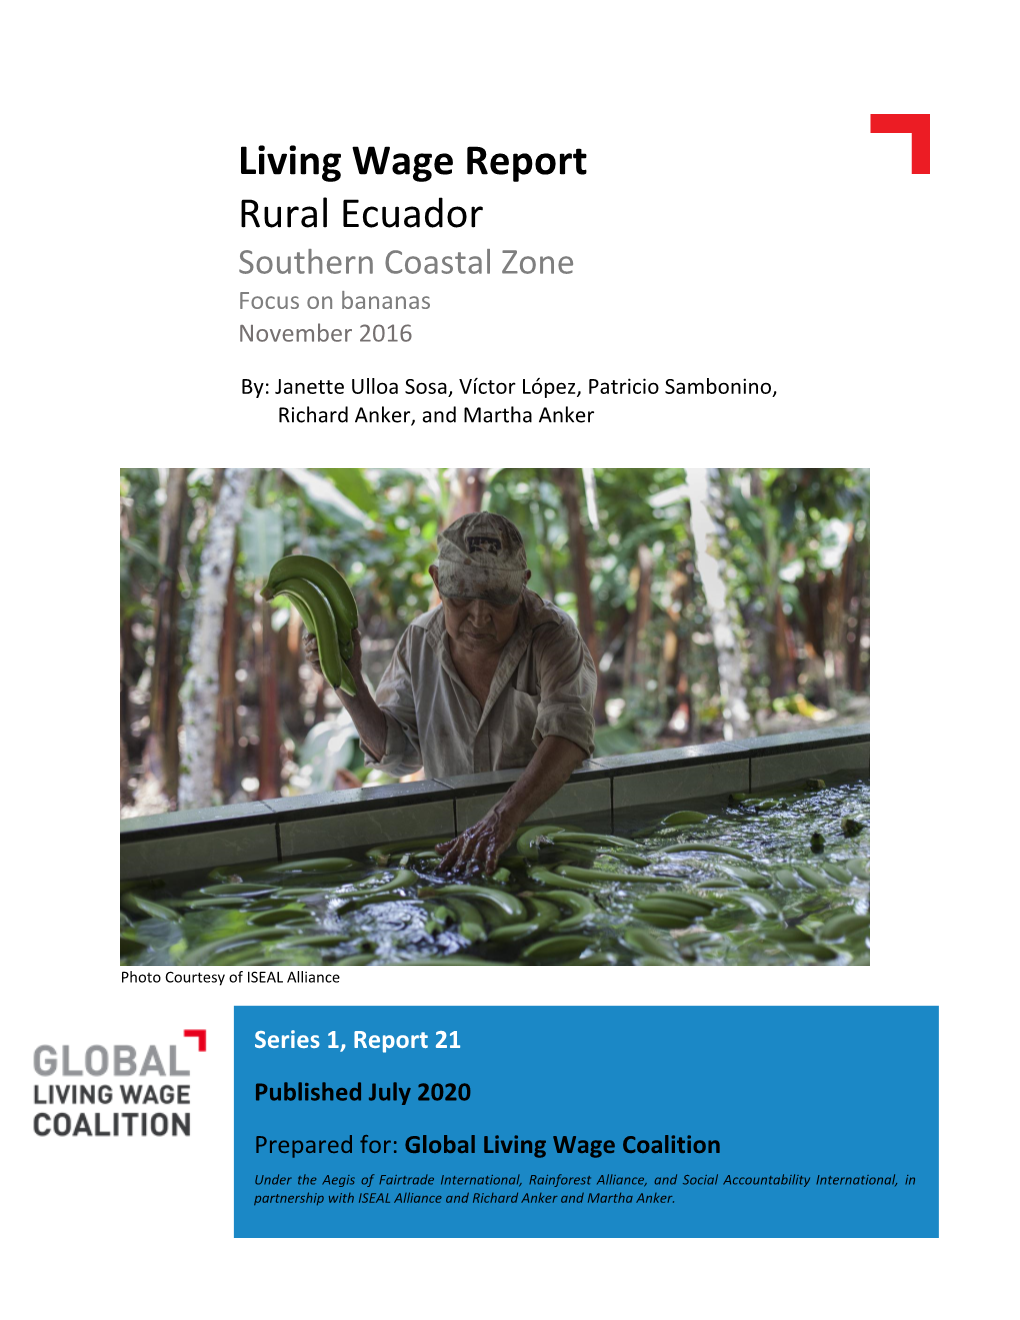 Living Wage Report Rural Ecuador Southern Coastal Zone Focus on Bananas November 2016